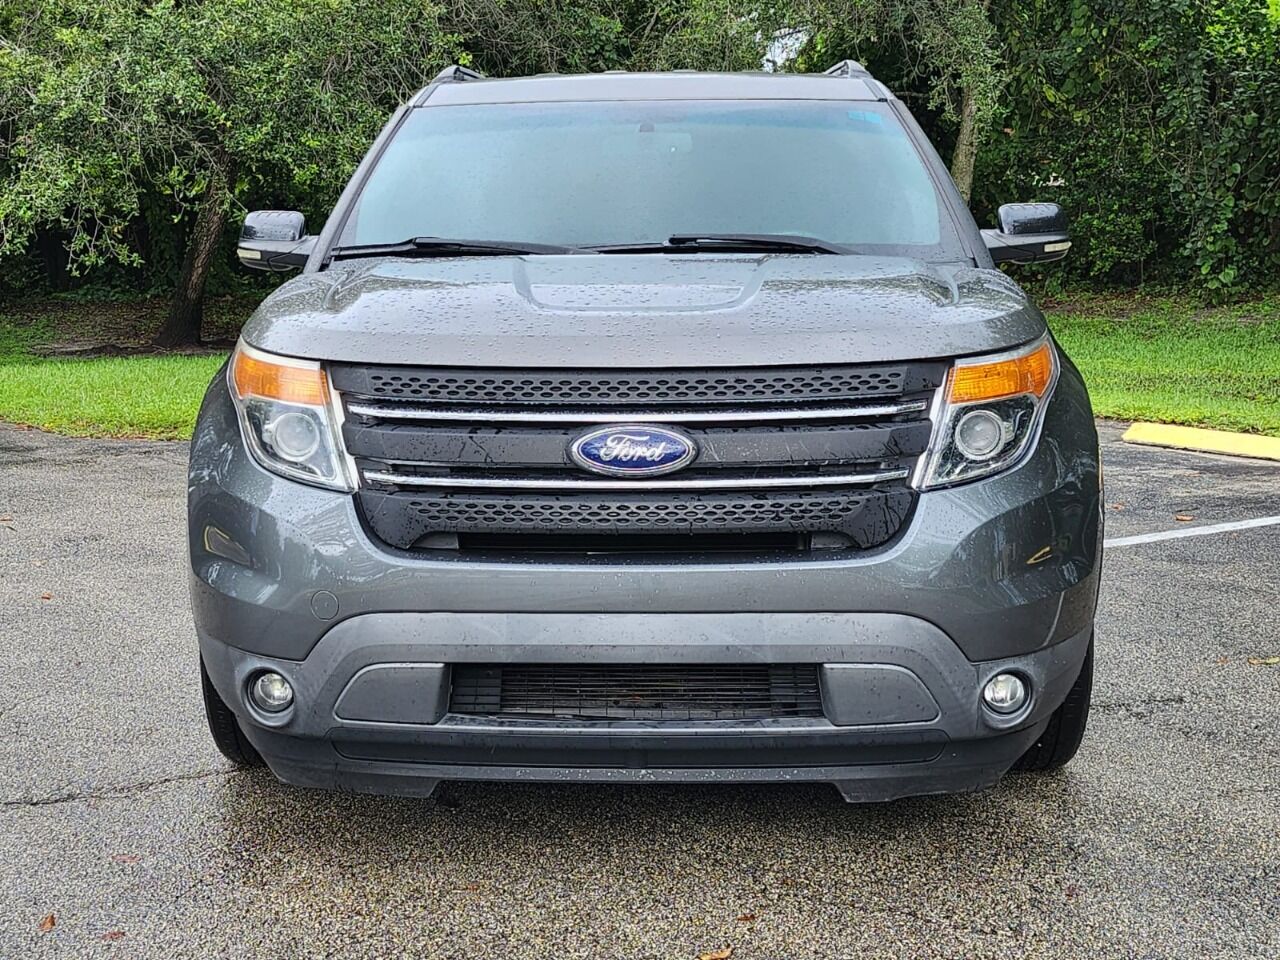 2013 Ford Explorer SUV / Crossover - $10,995